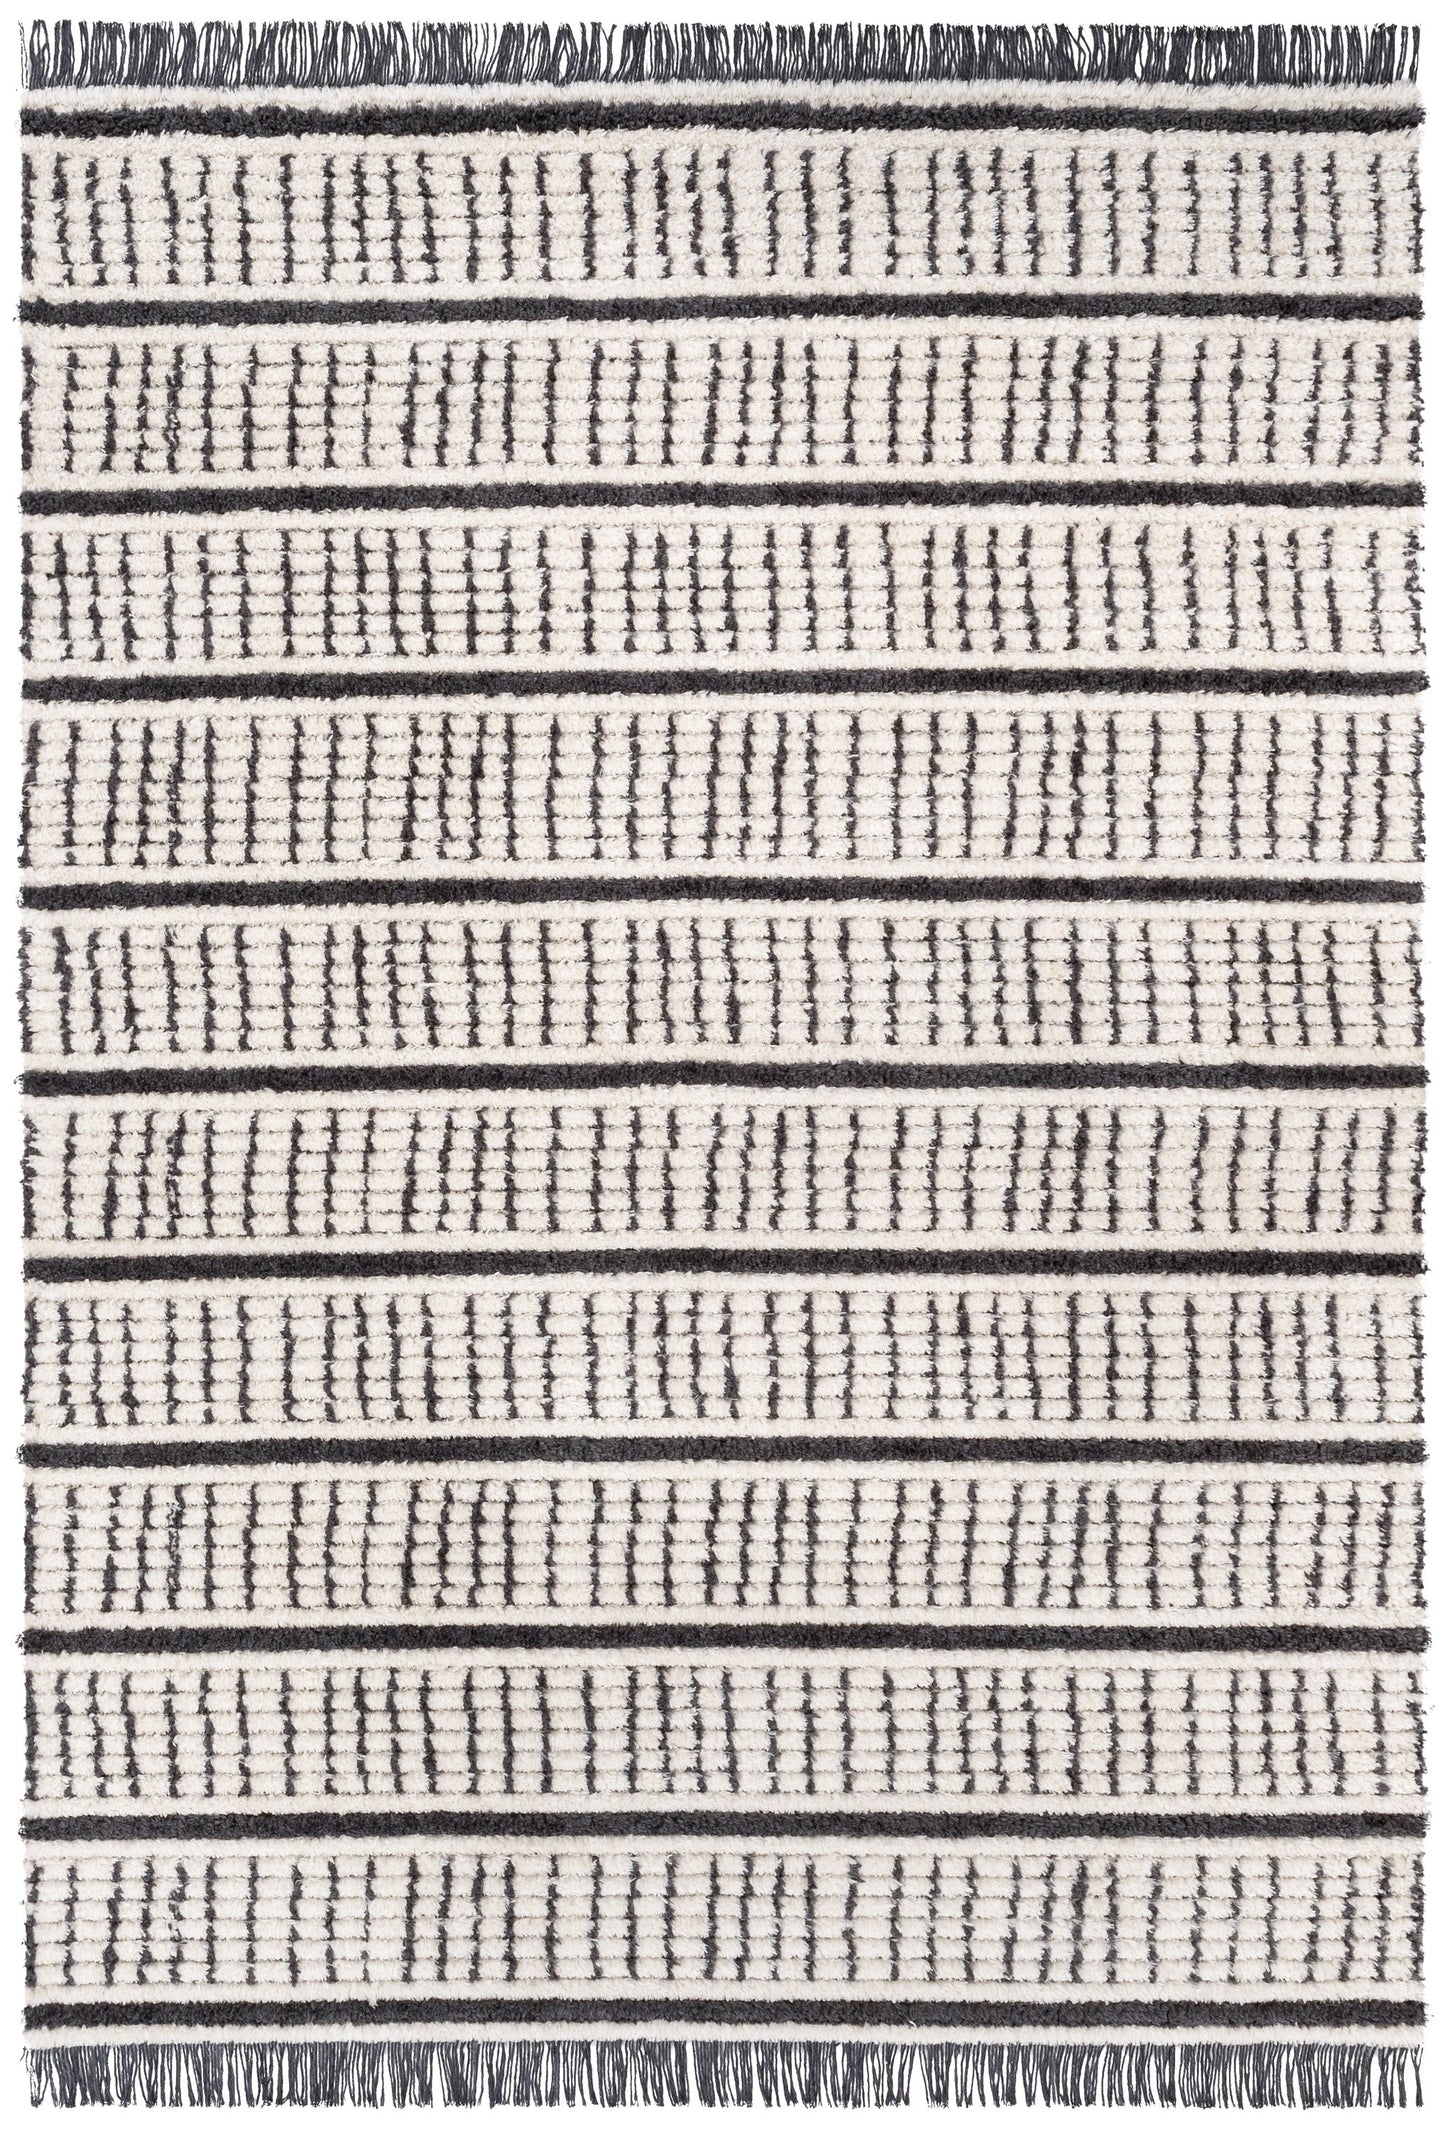 Viho Tribal Geometric Stripes Ivory High-Low Textured Pile Rug MYA-102